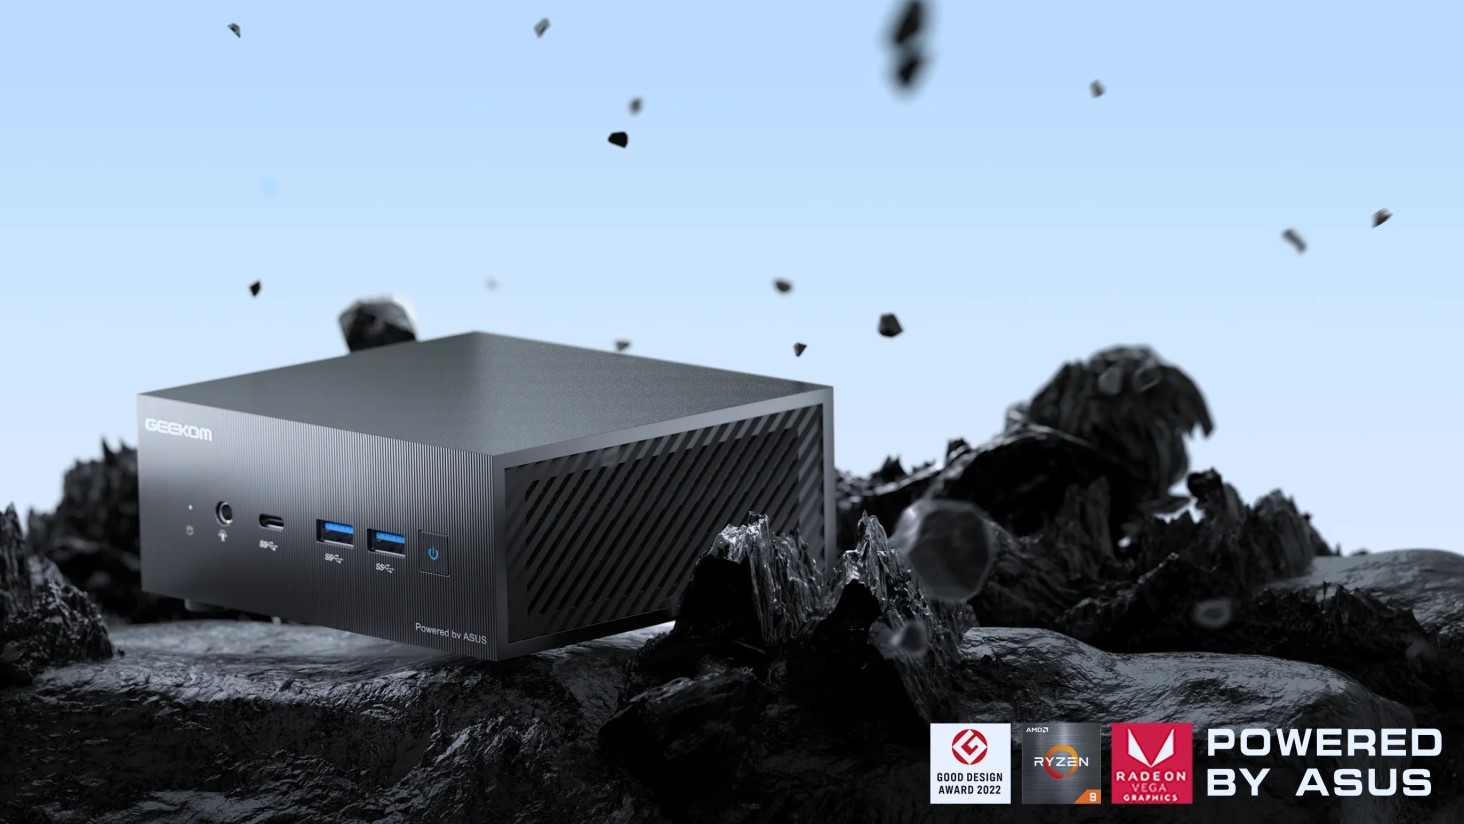 GMK Launches NucBox K1/K2 Mini PCs with Powerful AMD Ryzen 7 6800H